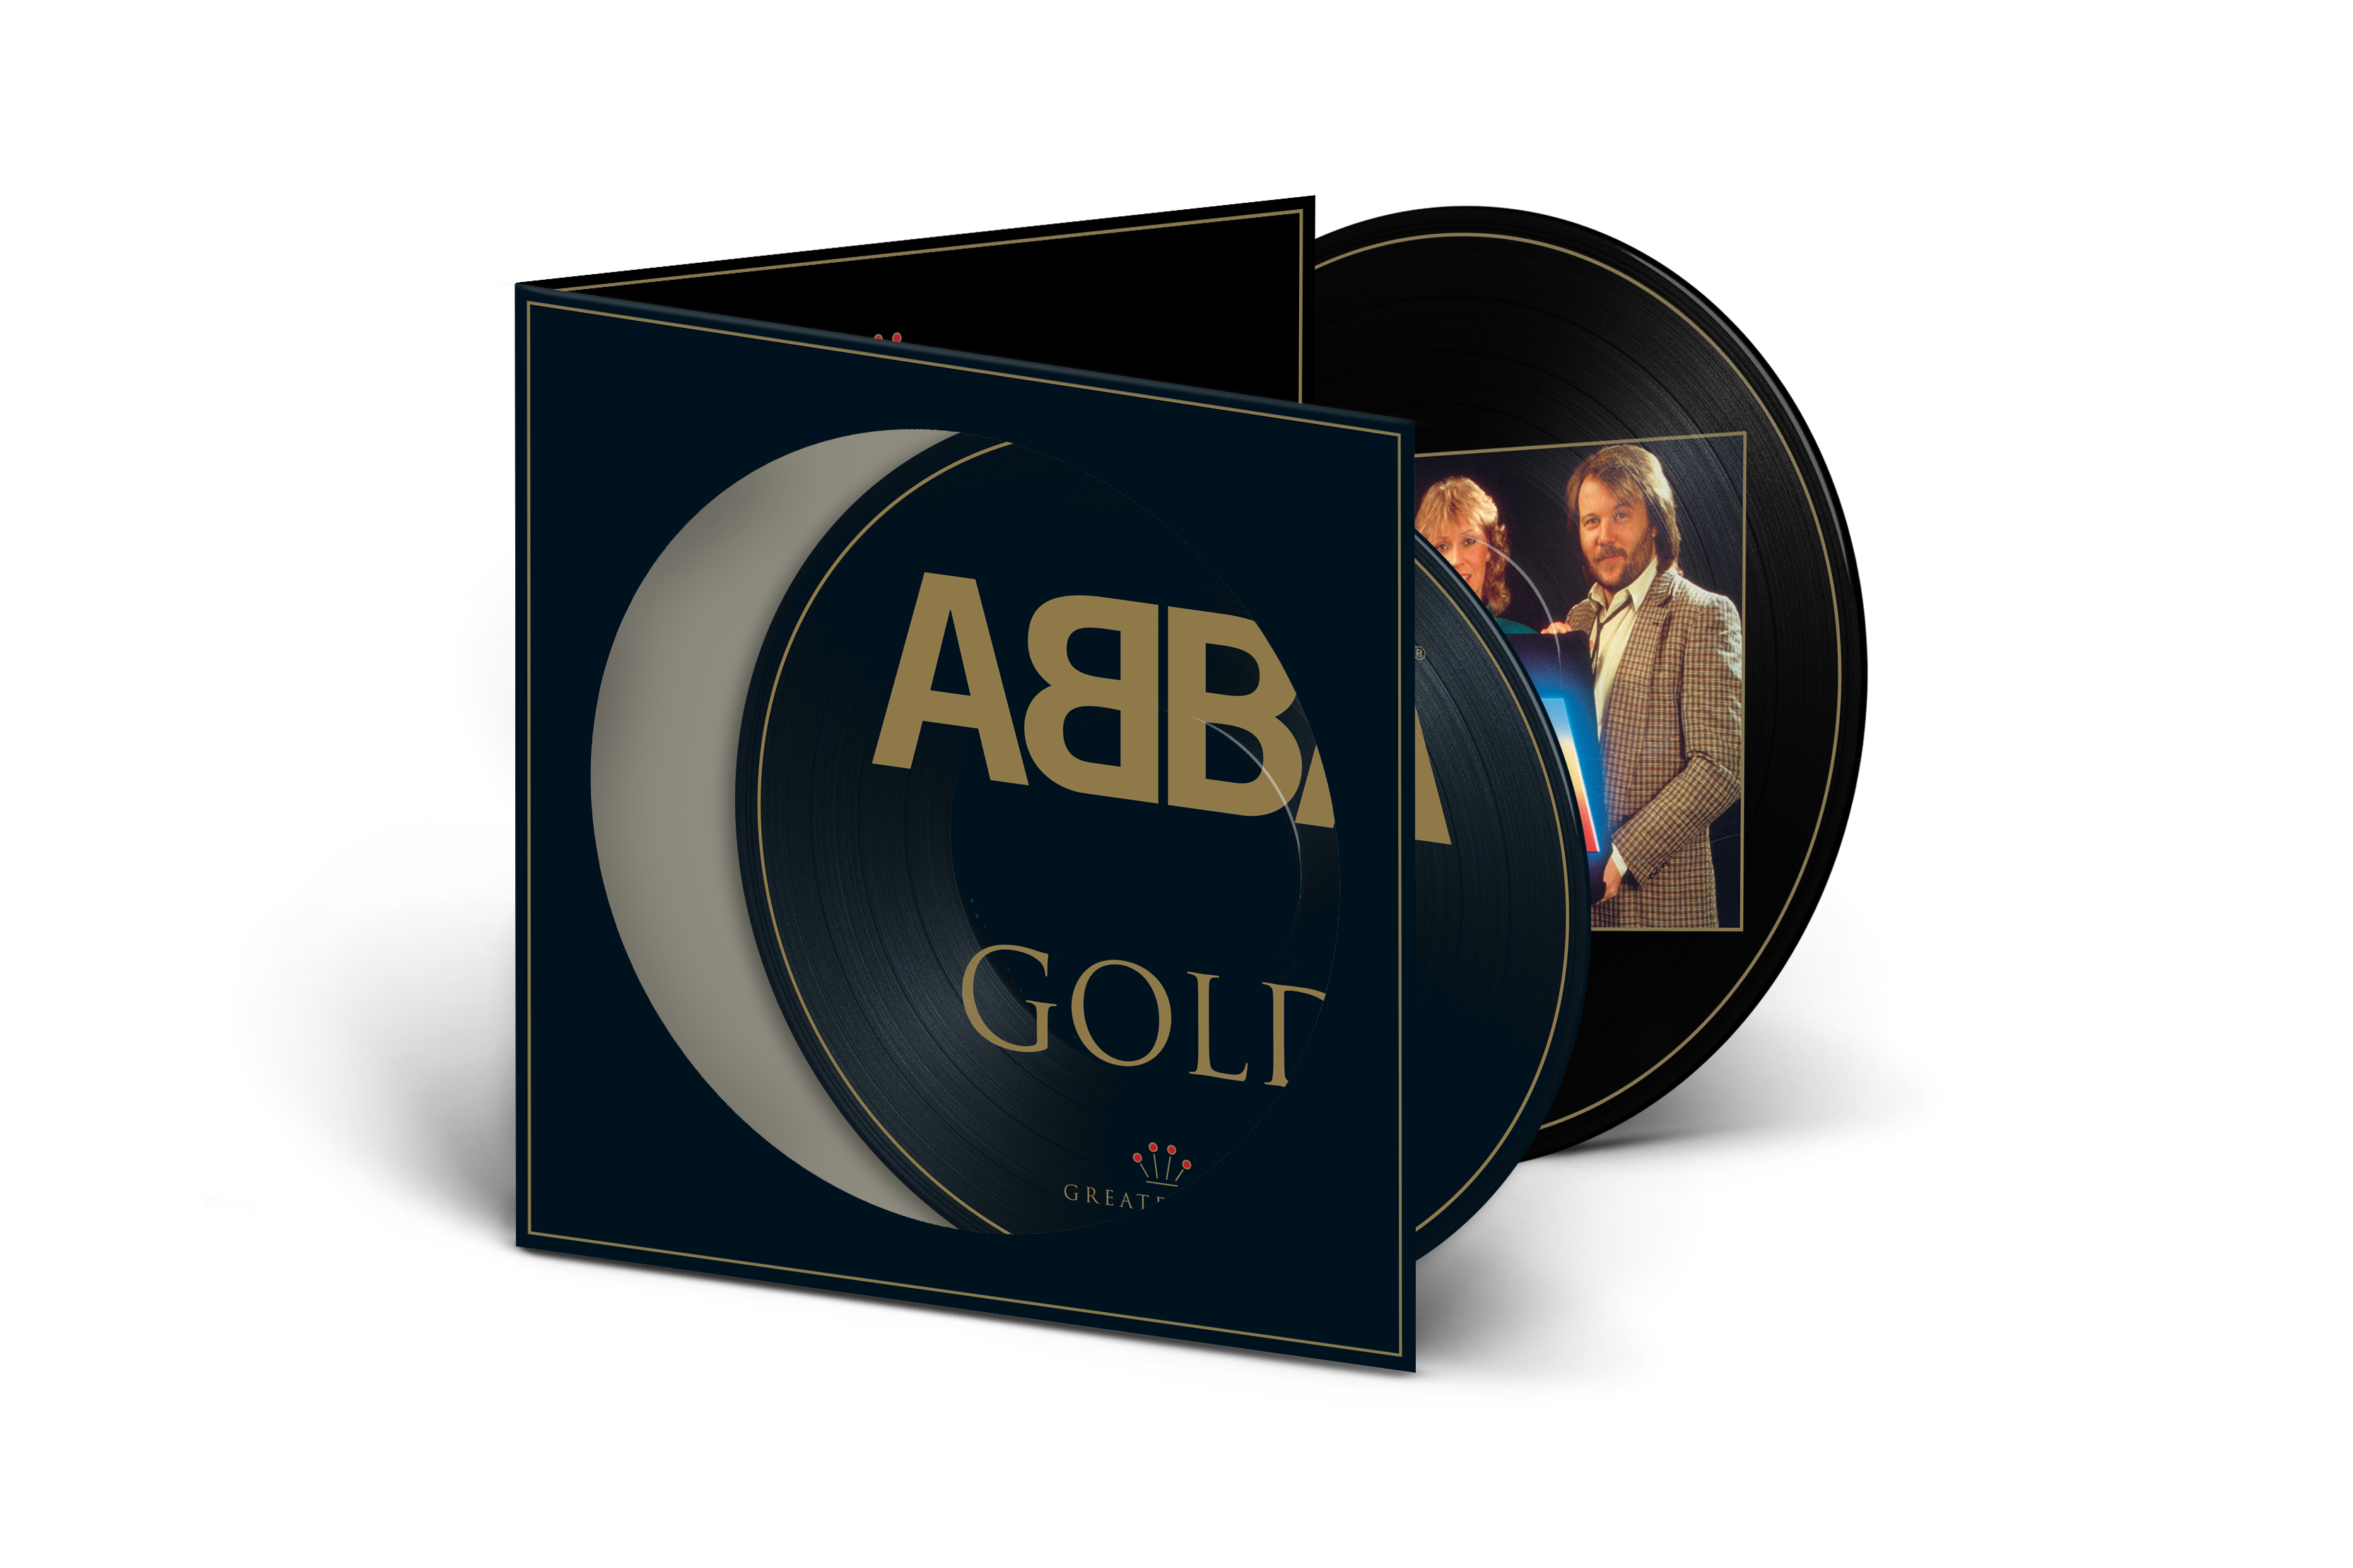 CD Shop - ABBA GOLD